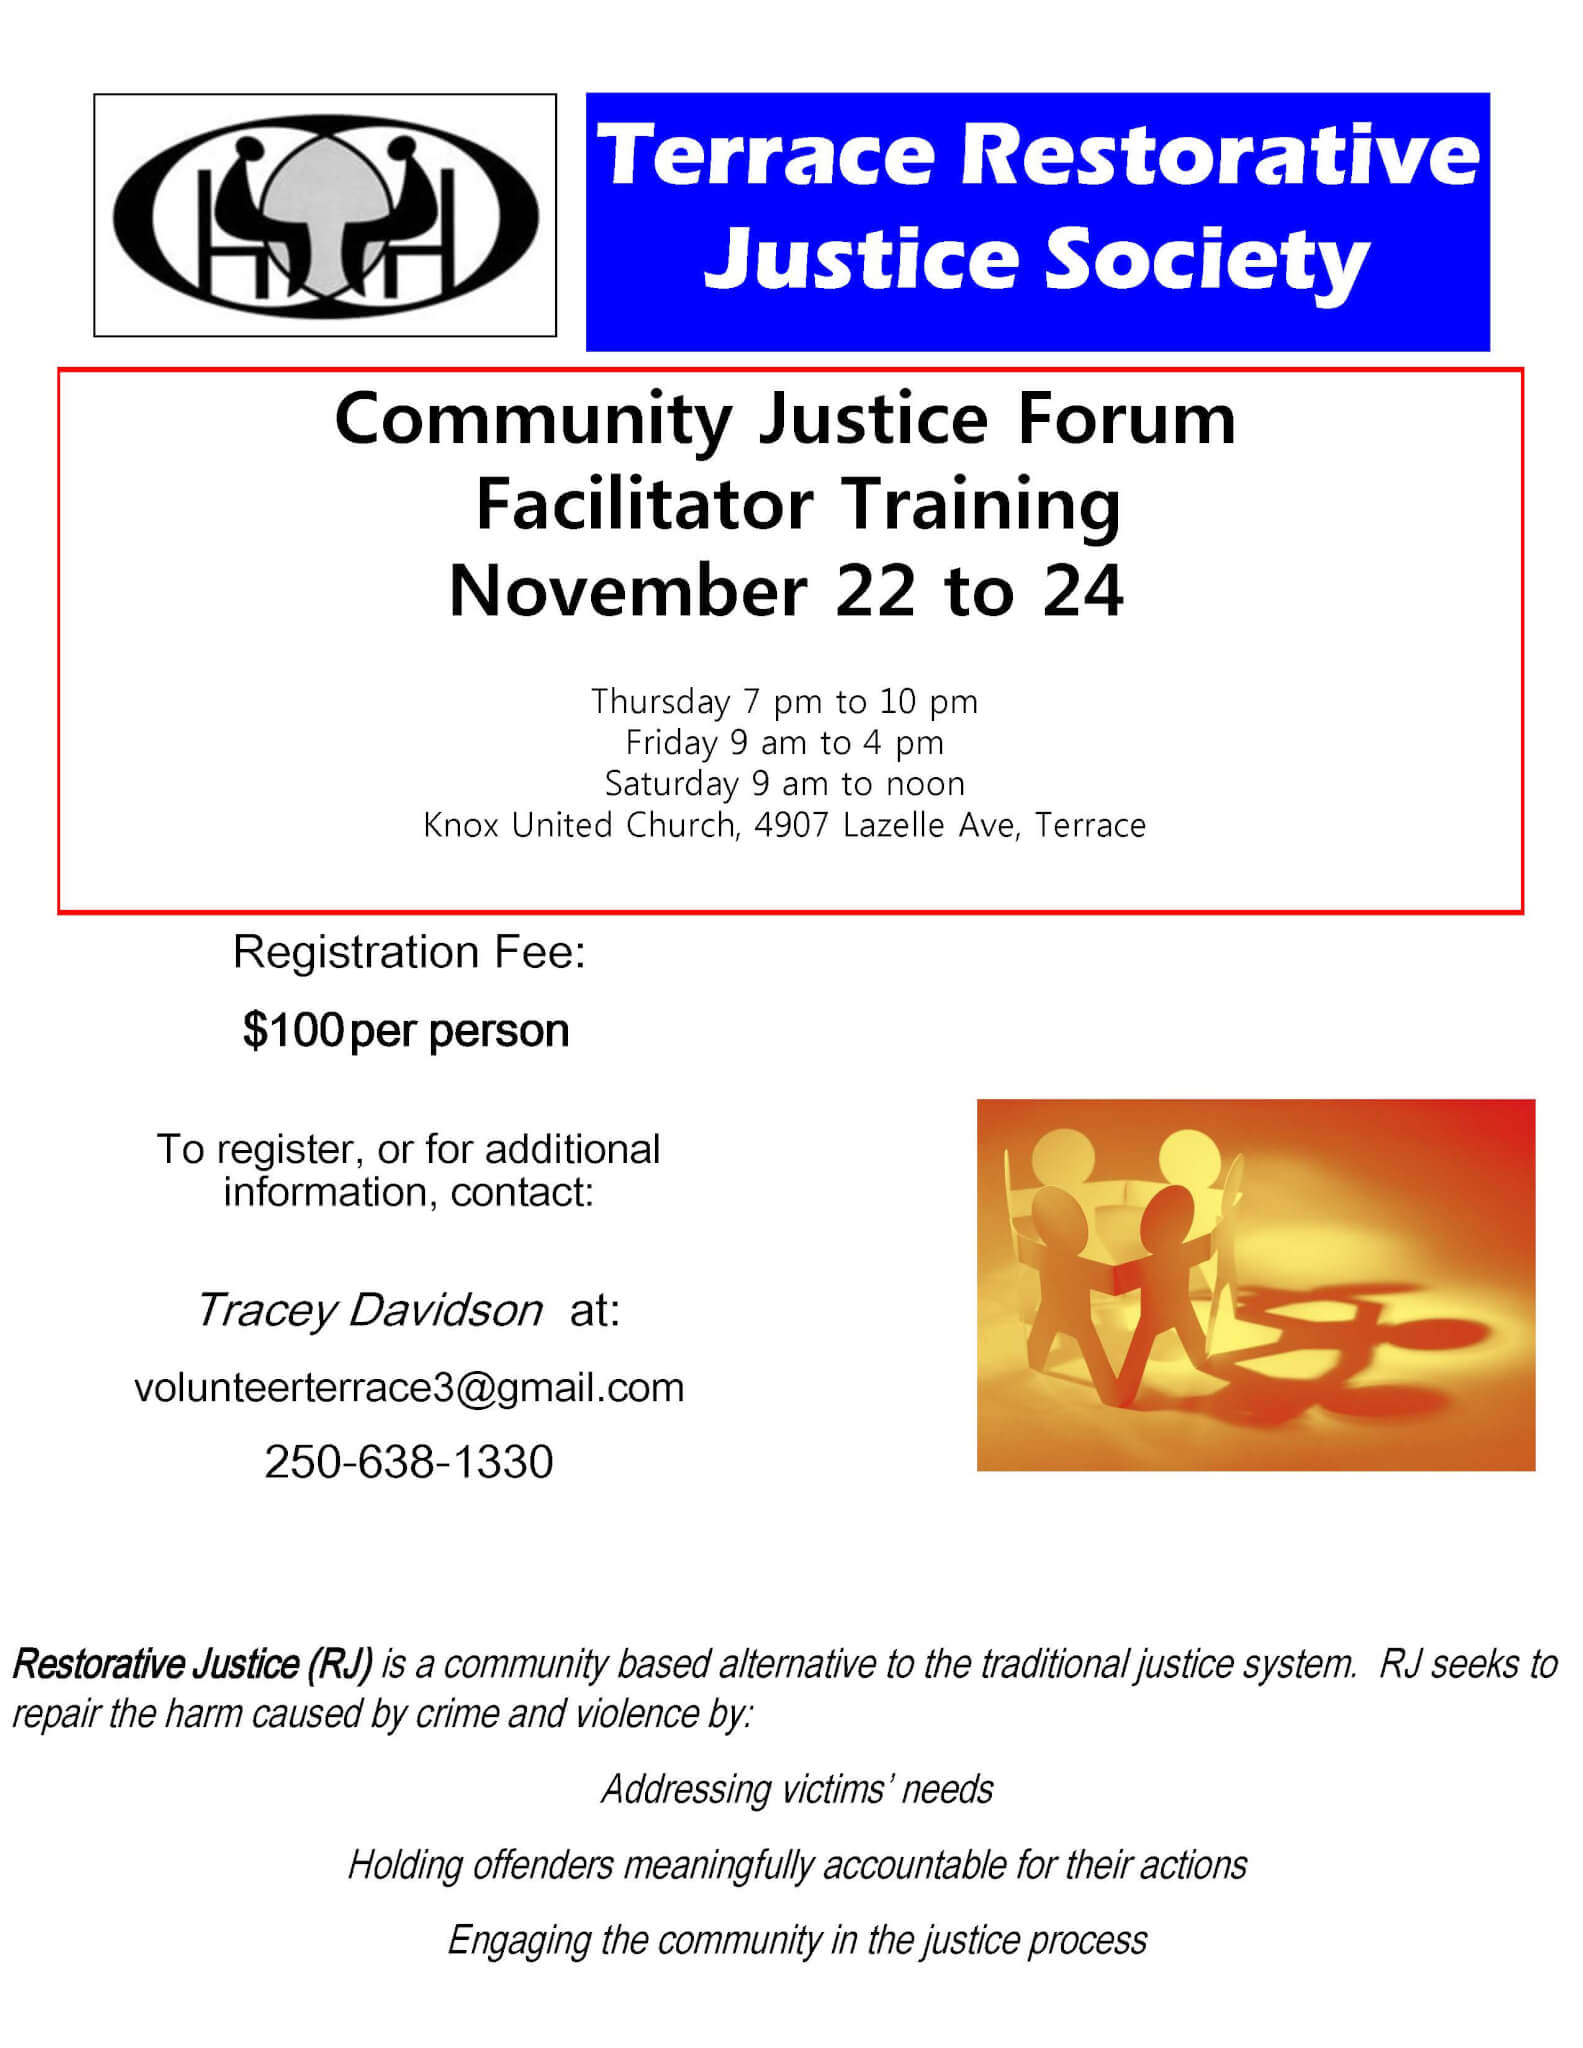 Community Justice Forum Facilitator Training – Nov 22 to 24